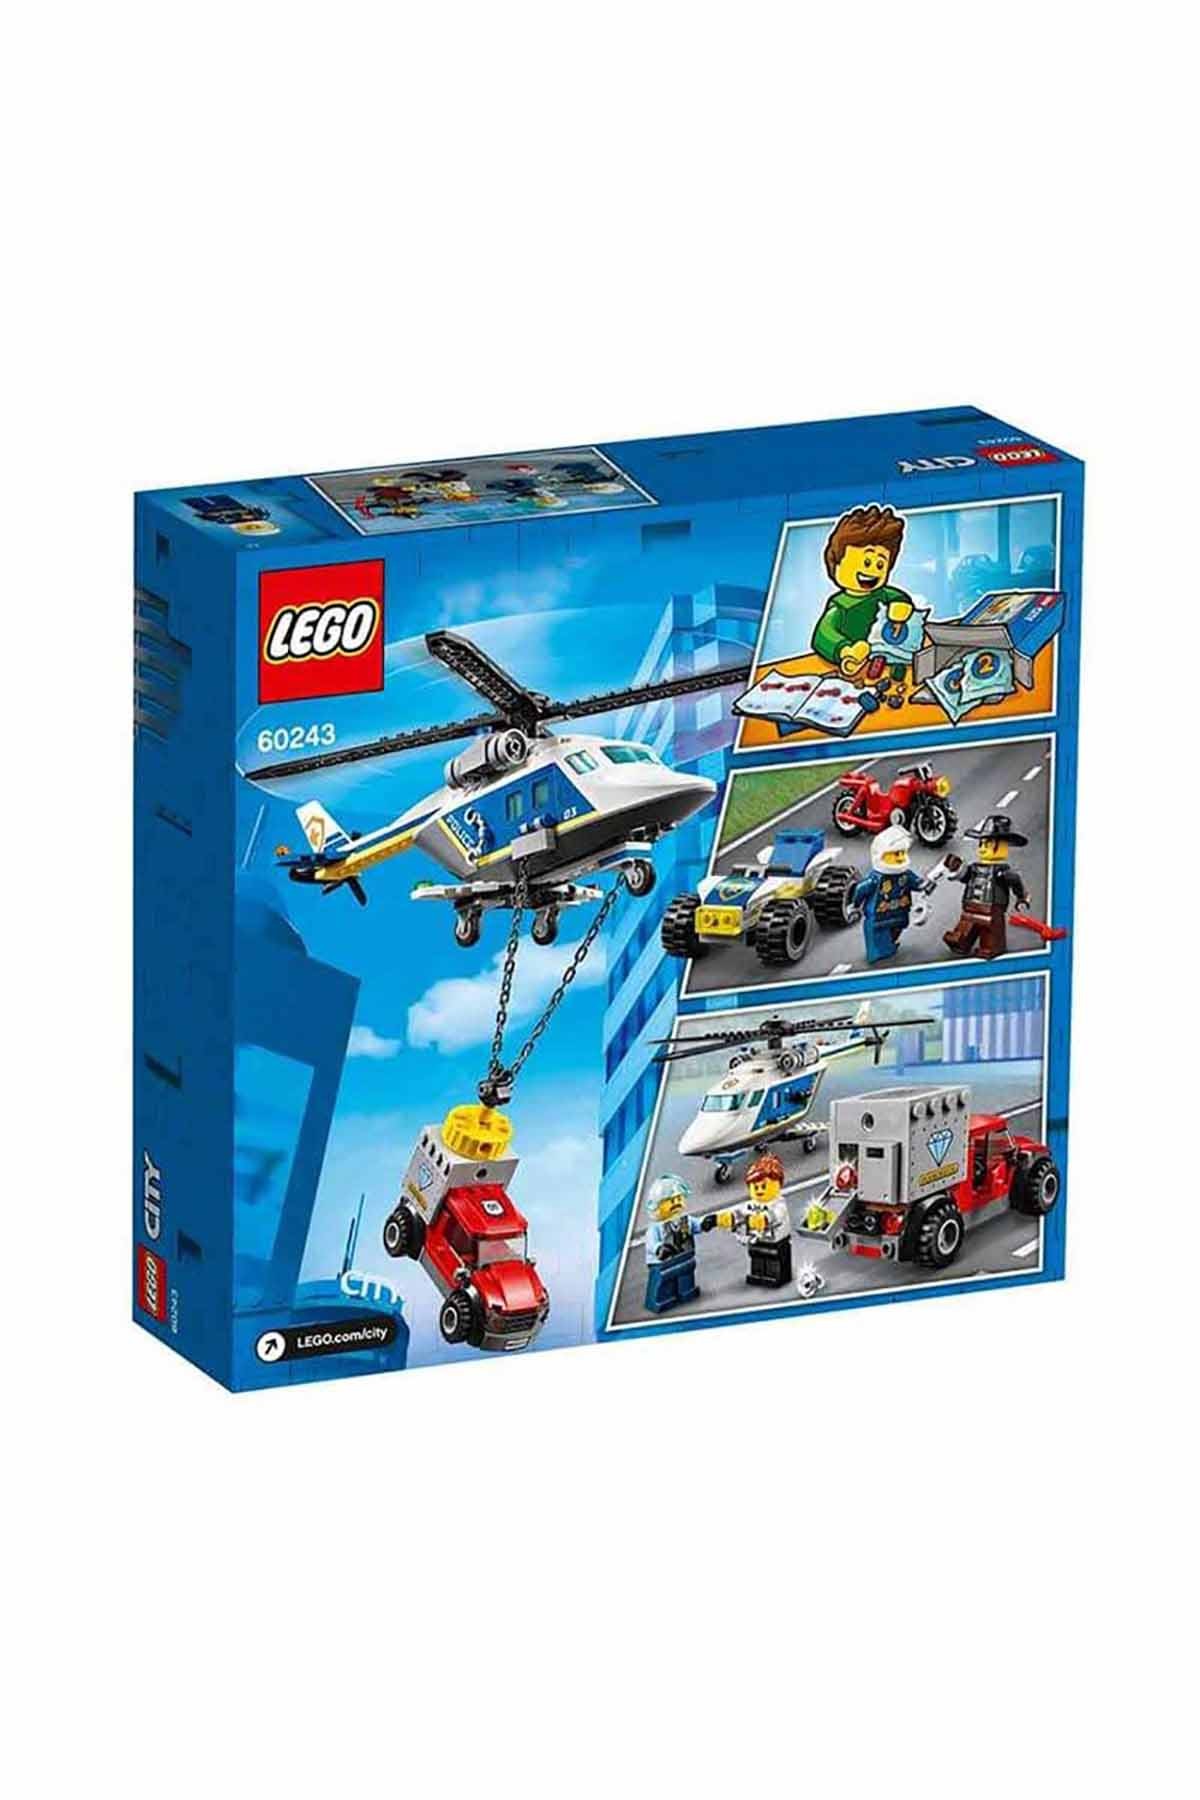 Lego City Polis Helikopteri Takibi 60243